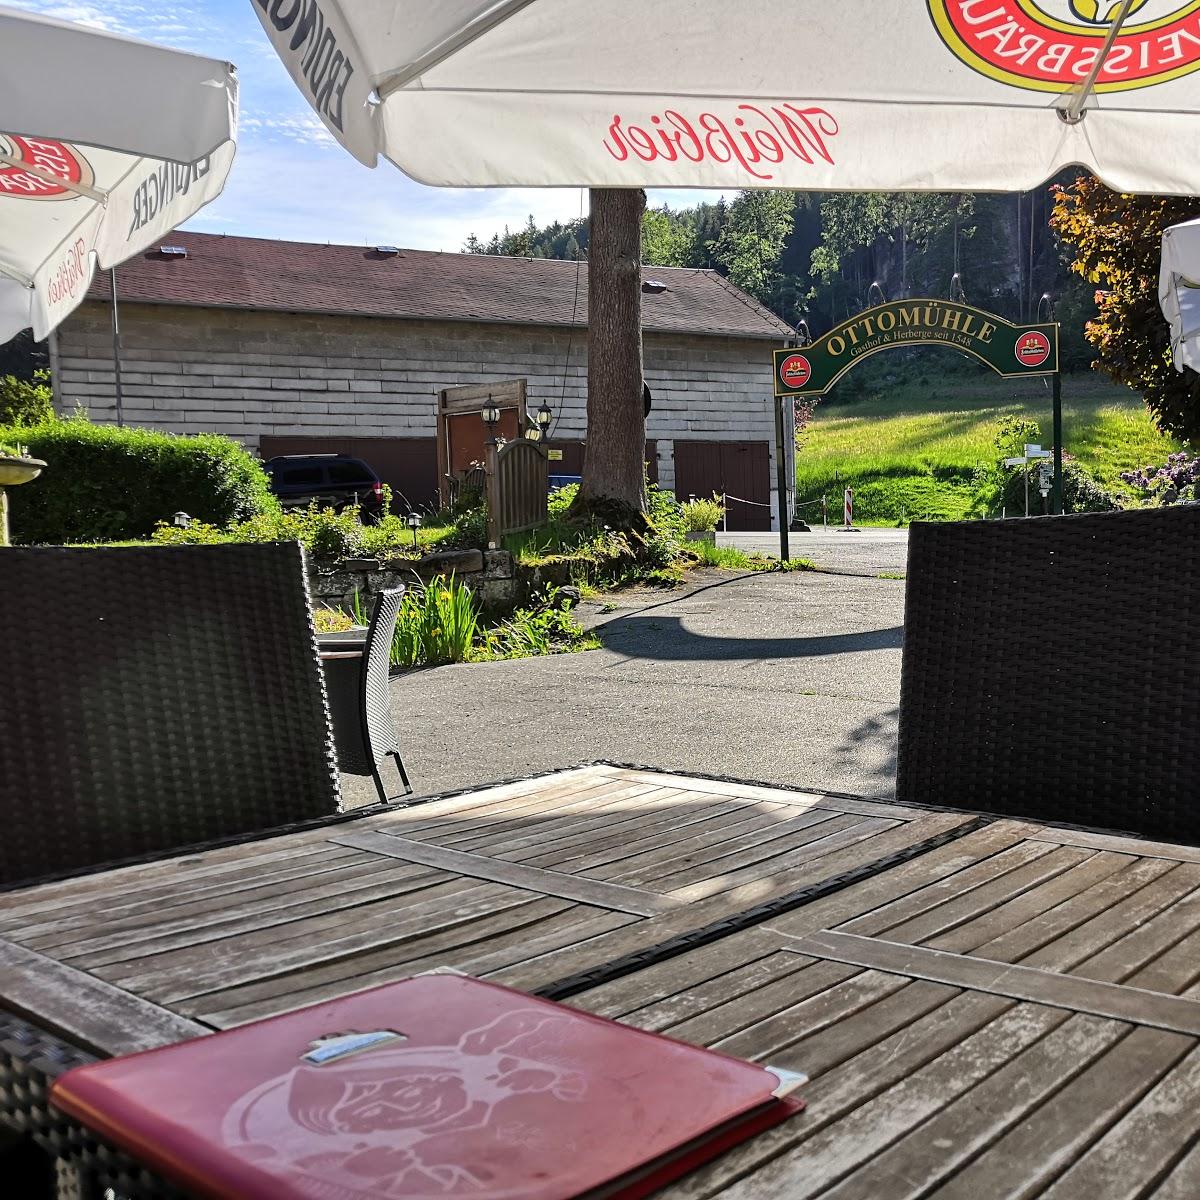 Restaurant "Gasthof Ottomühle" in Rosenthal-Bielatal